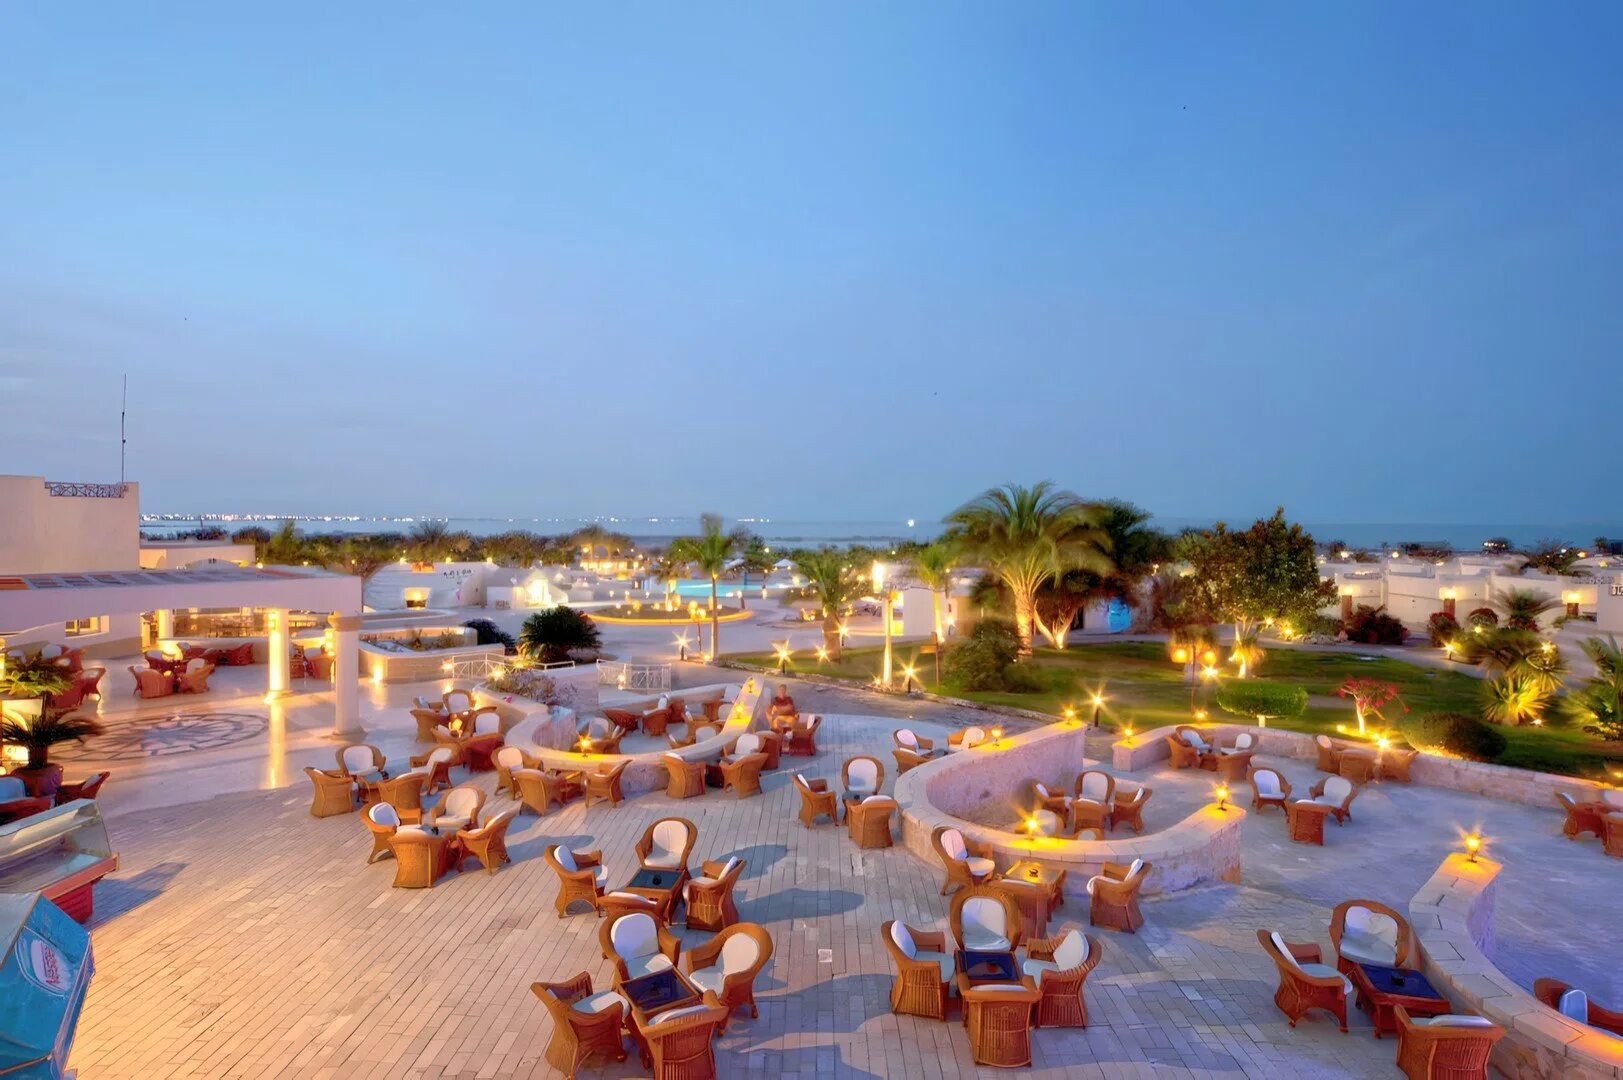 Coral beach resort хургада. Coral Beach Hotel Hurghada Египет Хургада. Корал Бич отель Хургада. Корал Бич Резорт Хургада 4. Египет Хургада отель Корал Бич Резорт 4 звезды.